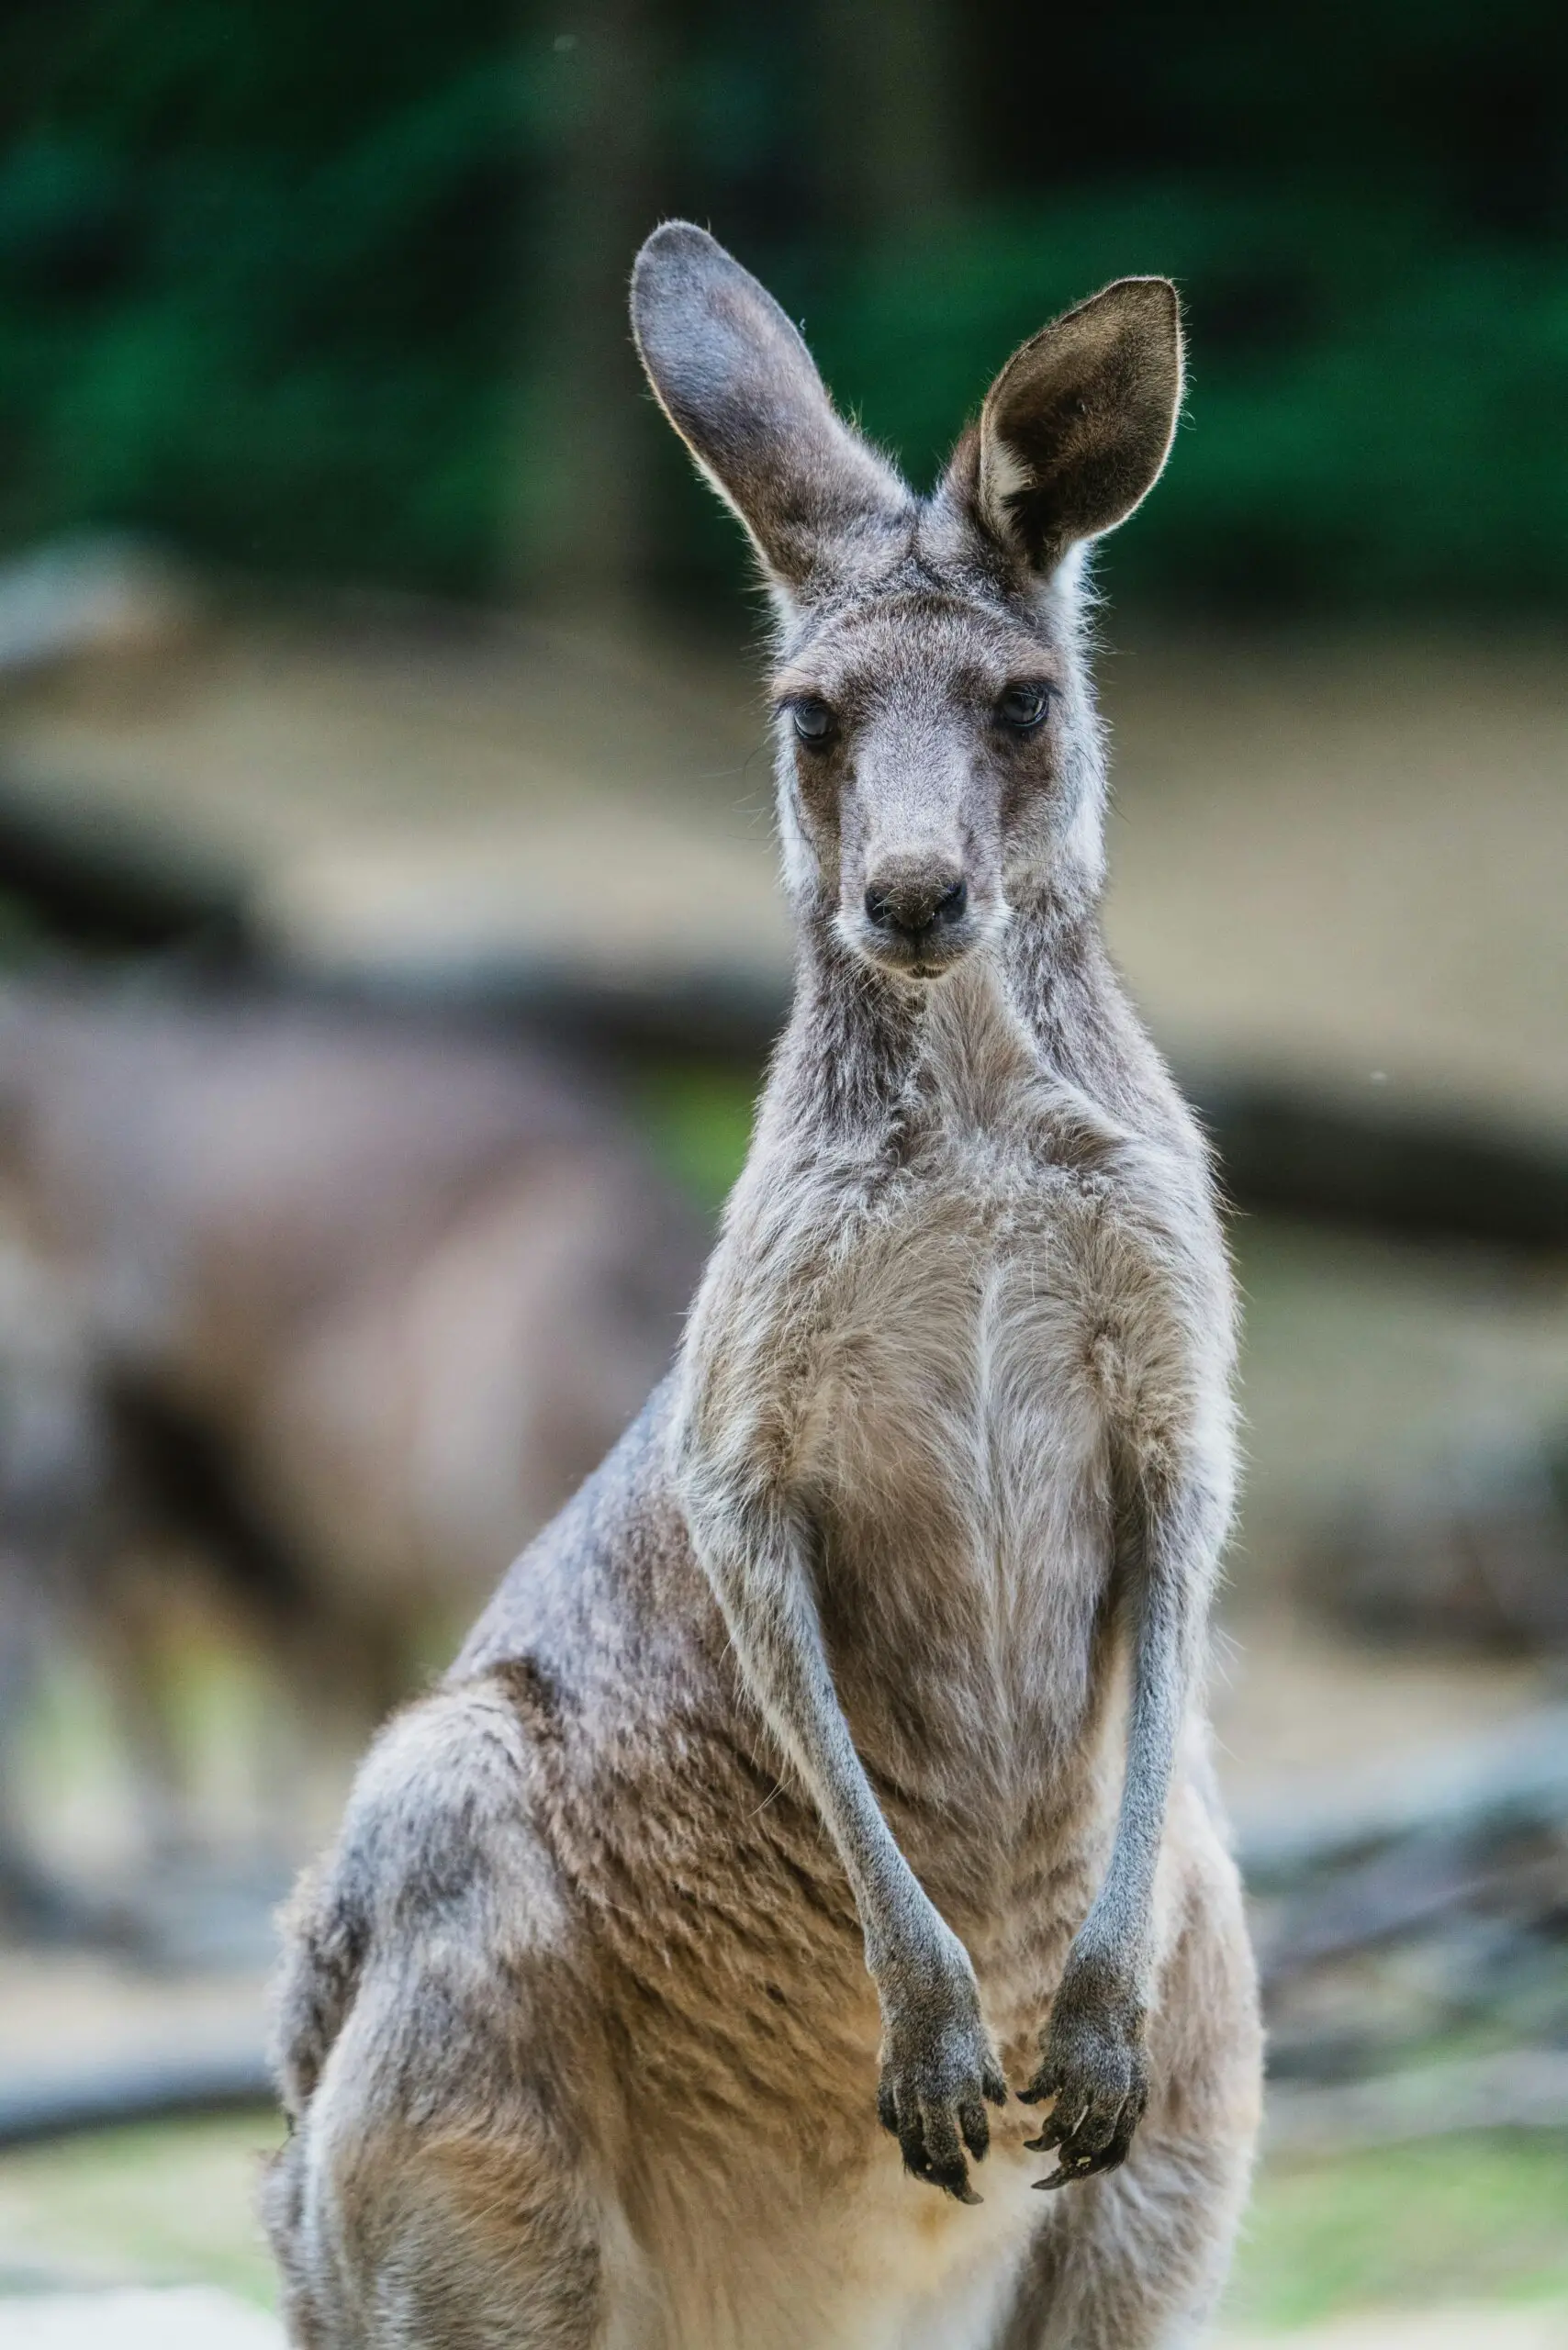 Can You Hunt Kangaroo In Australia